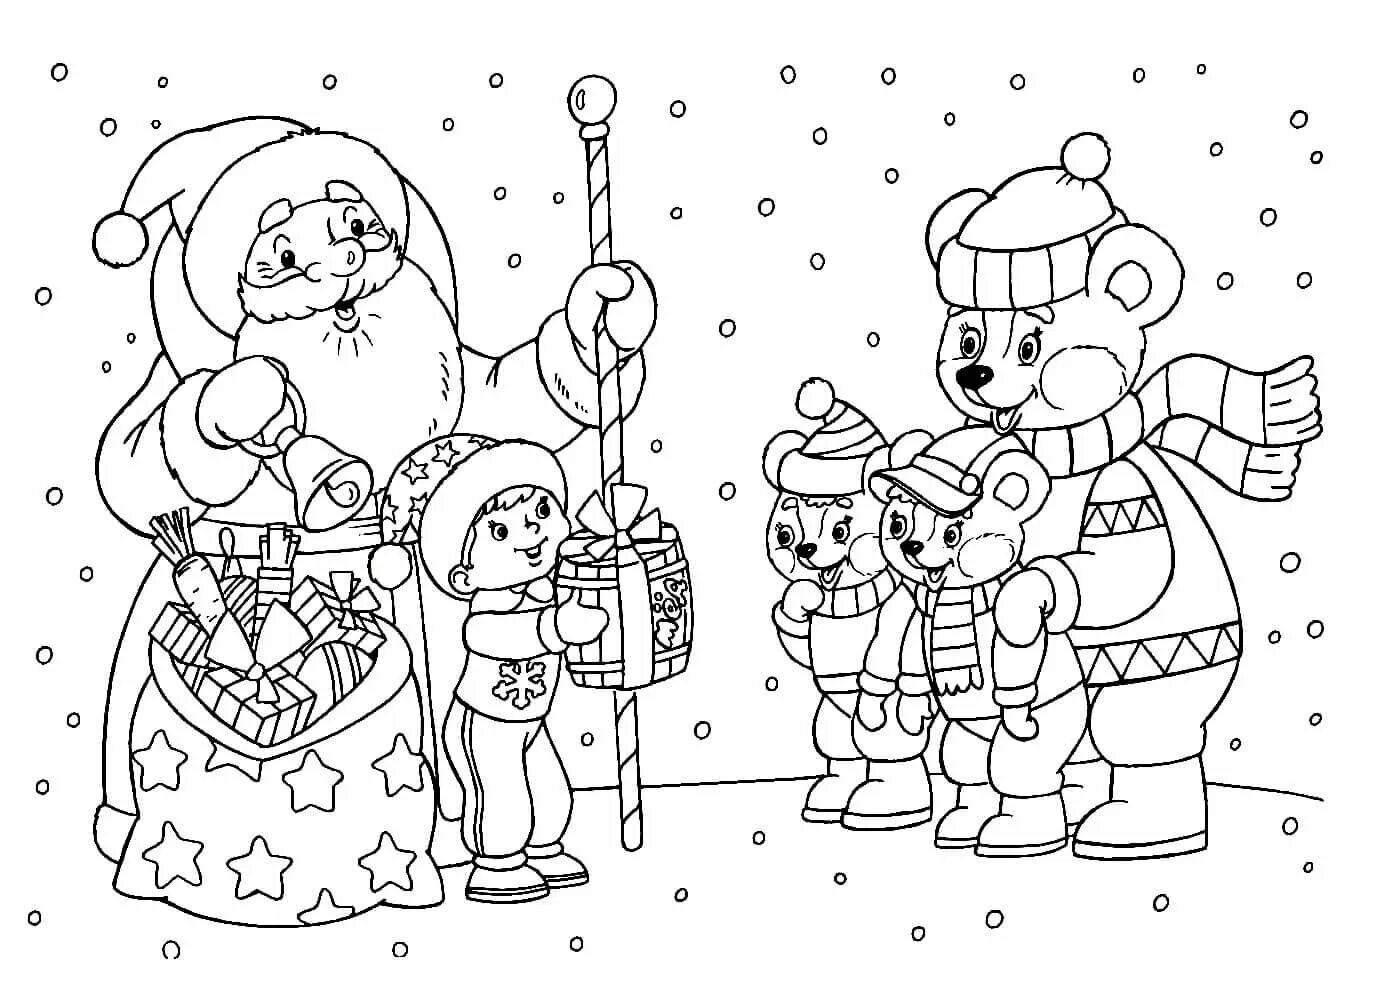 Animated Santa Claus coloring book